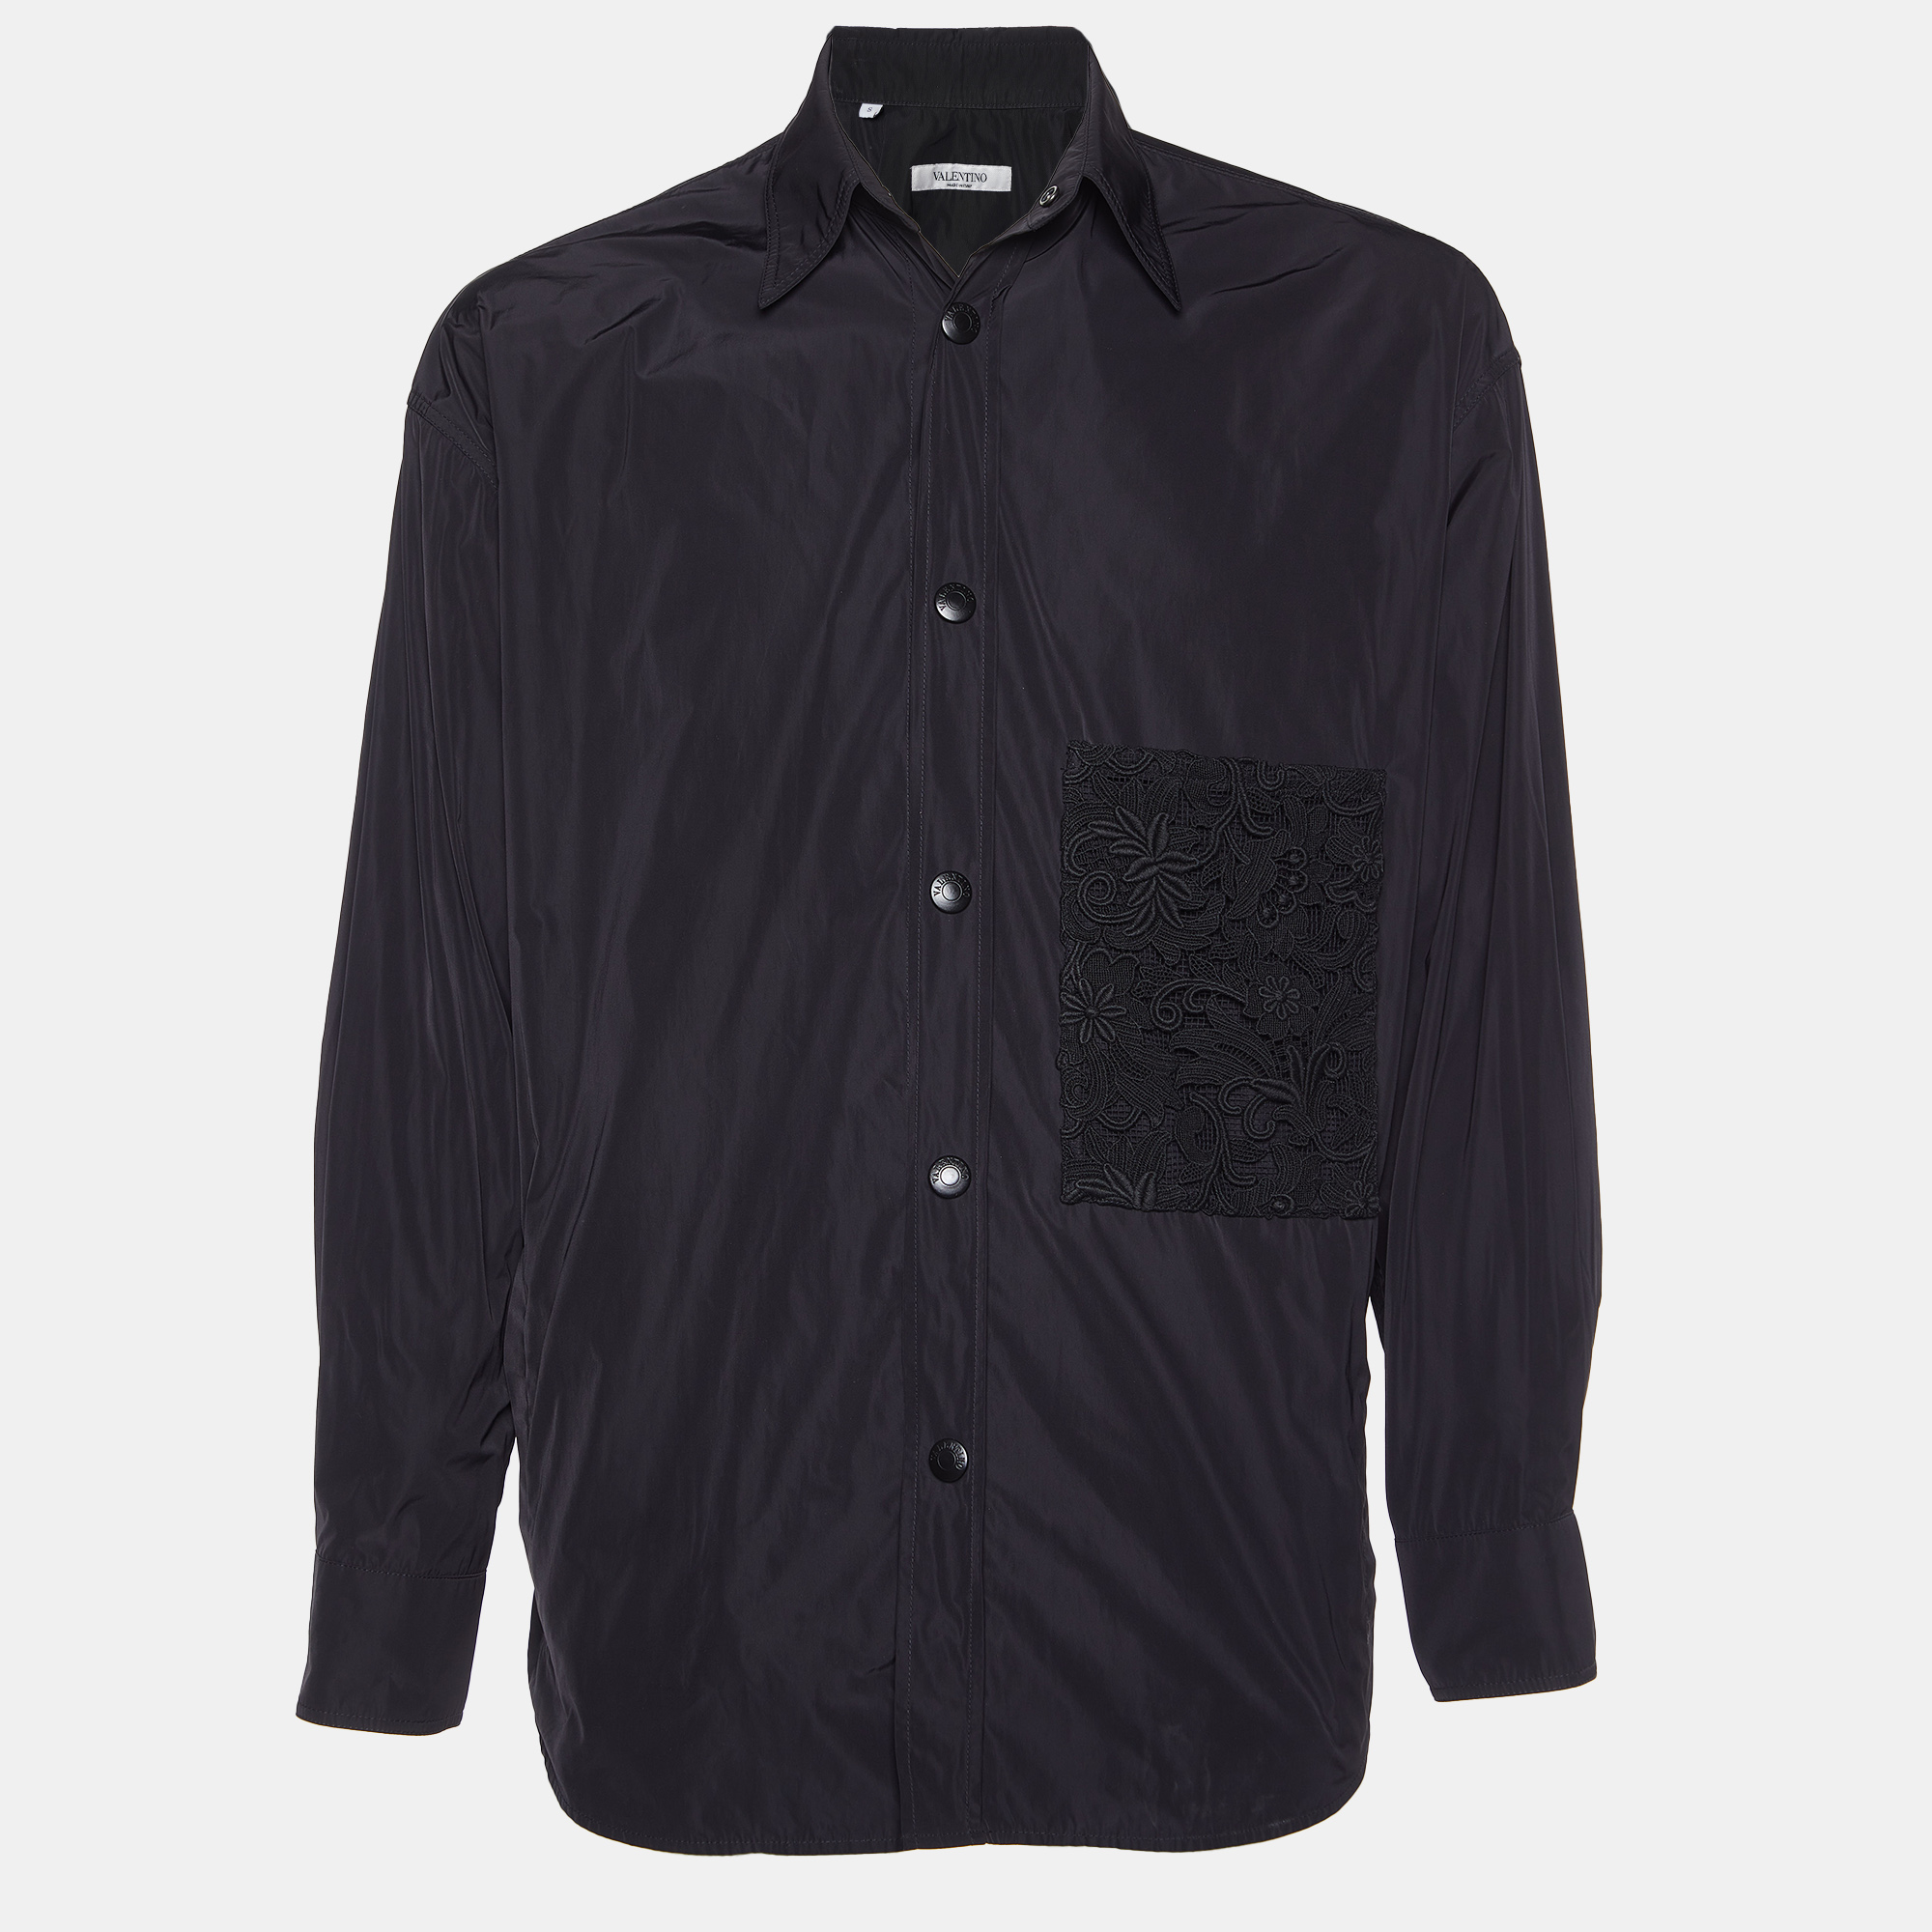 Valentino black lace trim pocket synthetic oversized shirt s